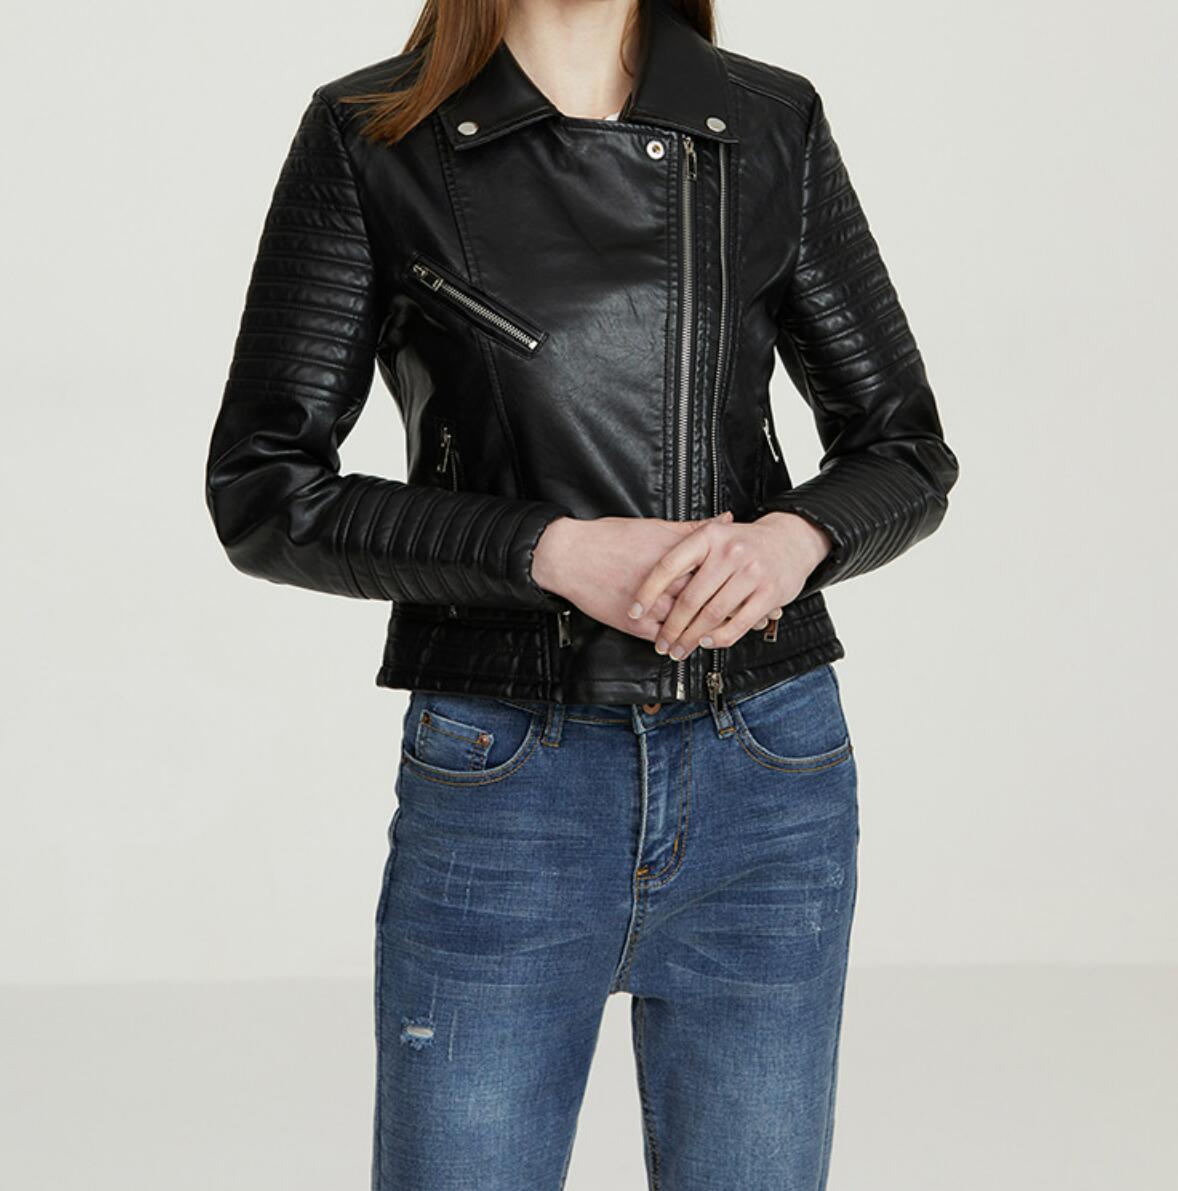 PU Leather Jacket Coat Lapel Full Sleeve Contrast Color Zipper Short